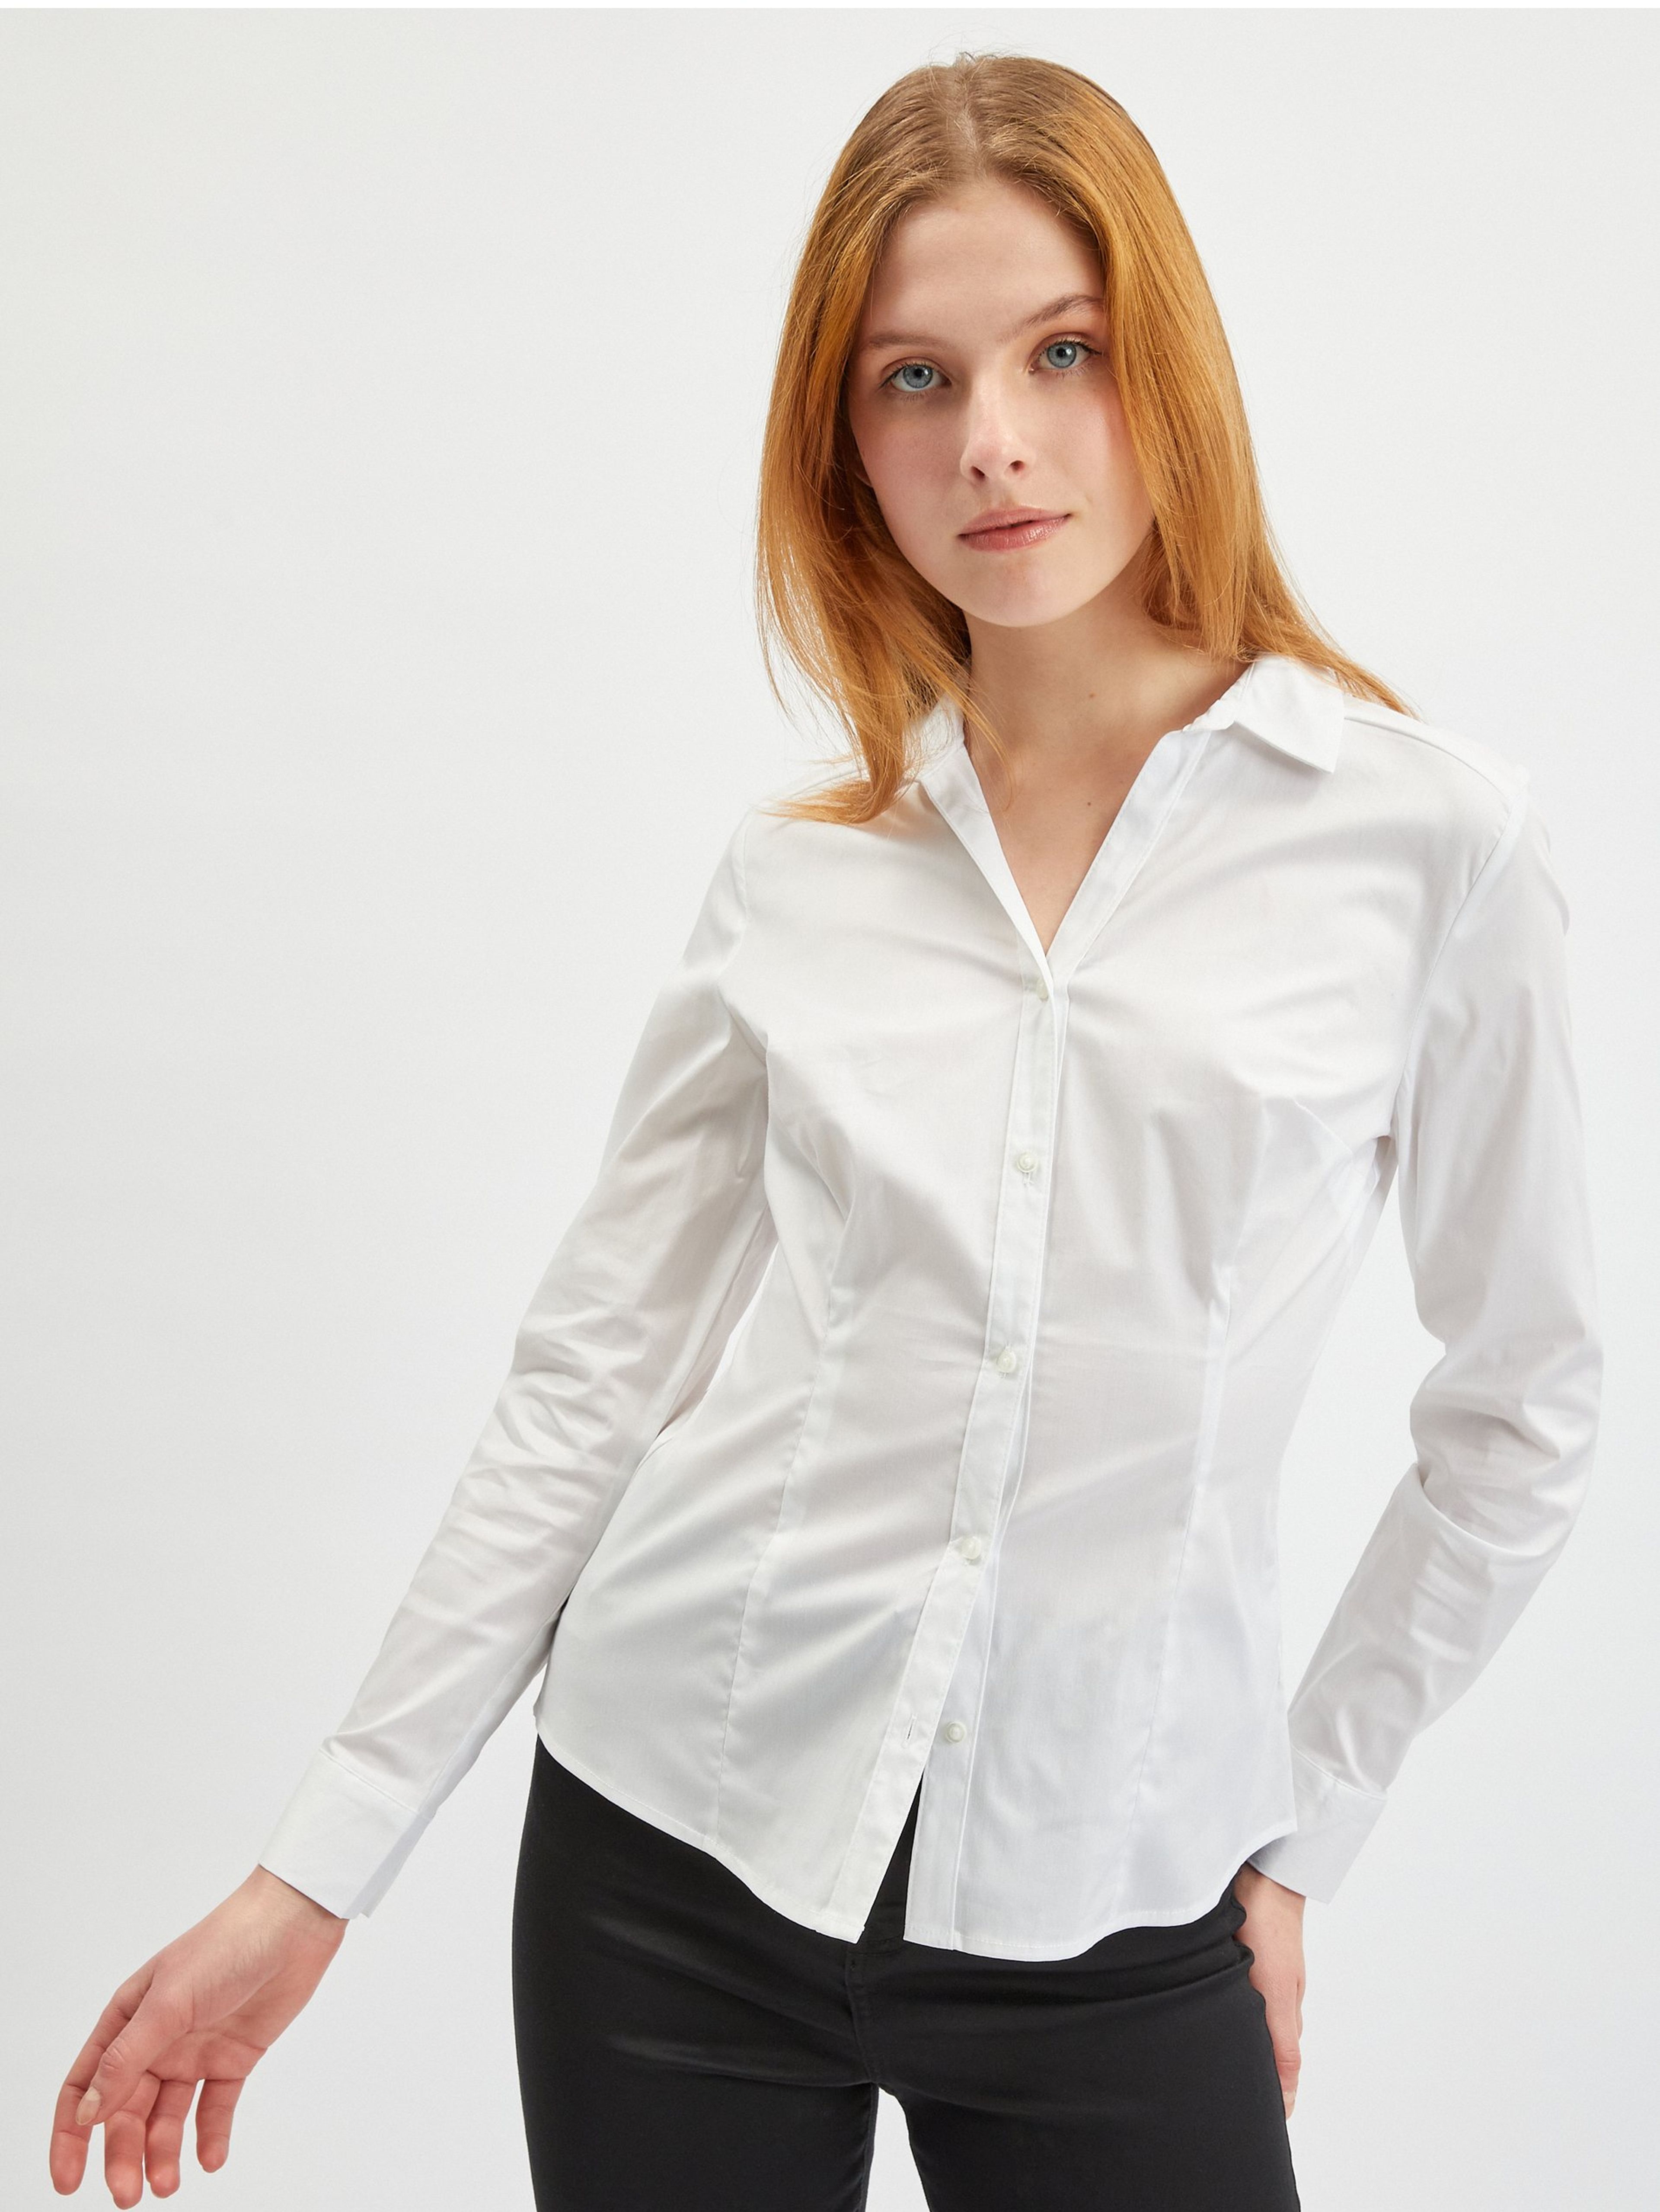 Biała koszula damska ORSAY